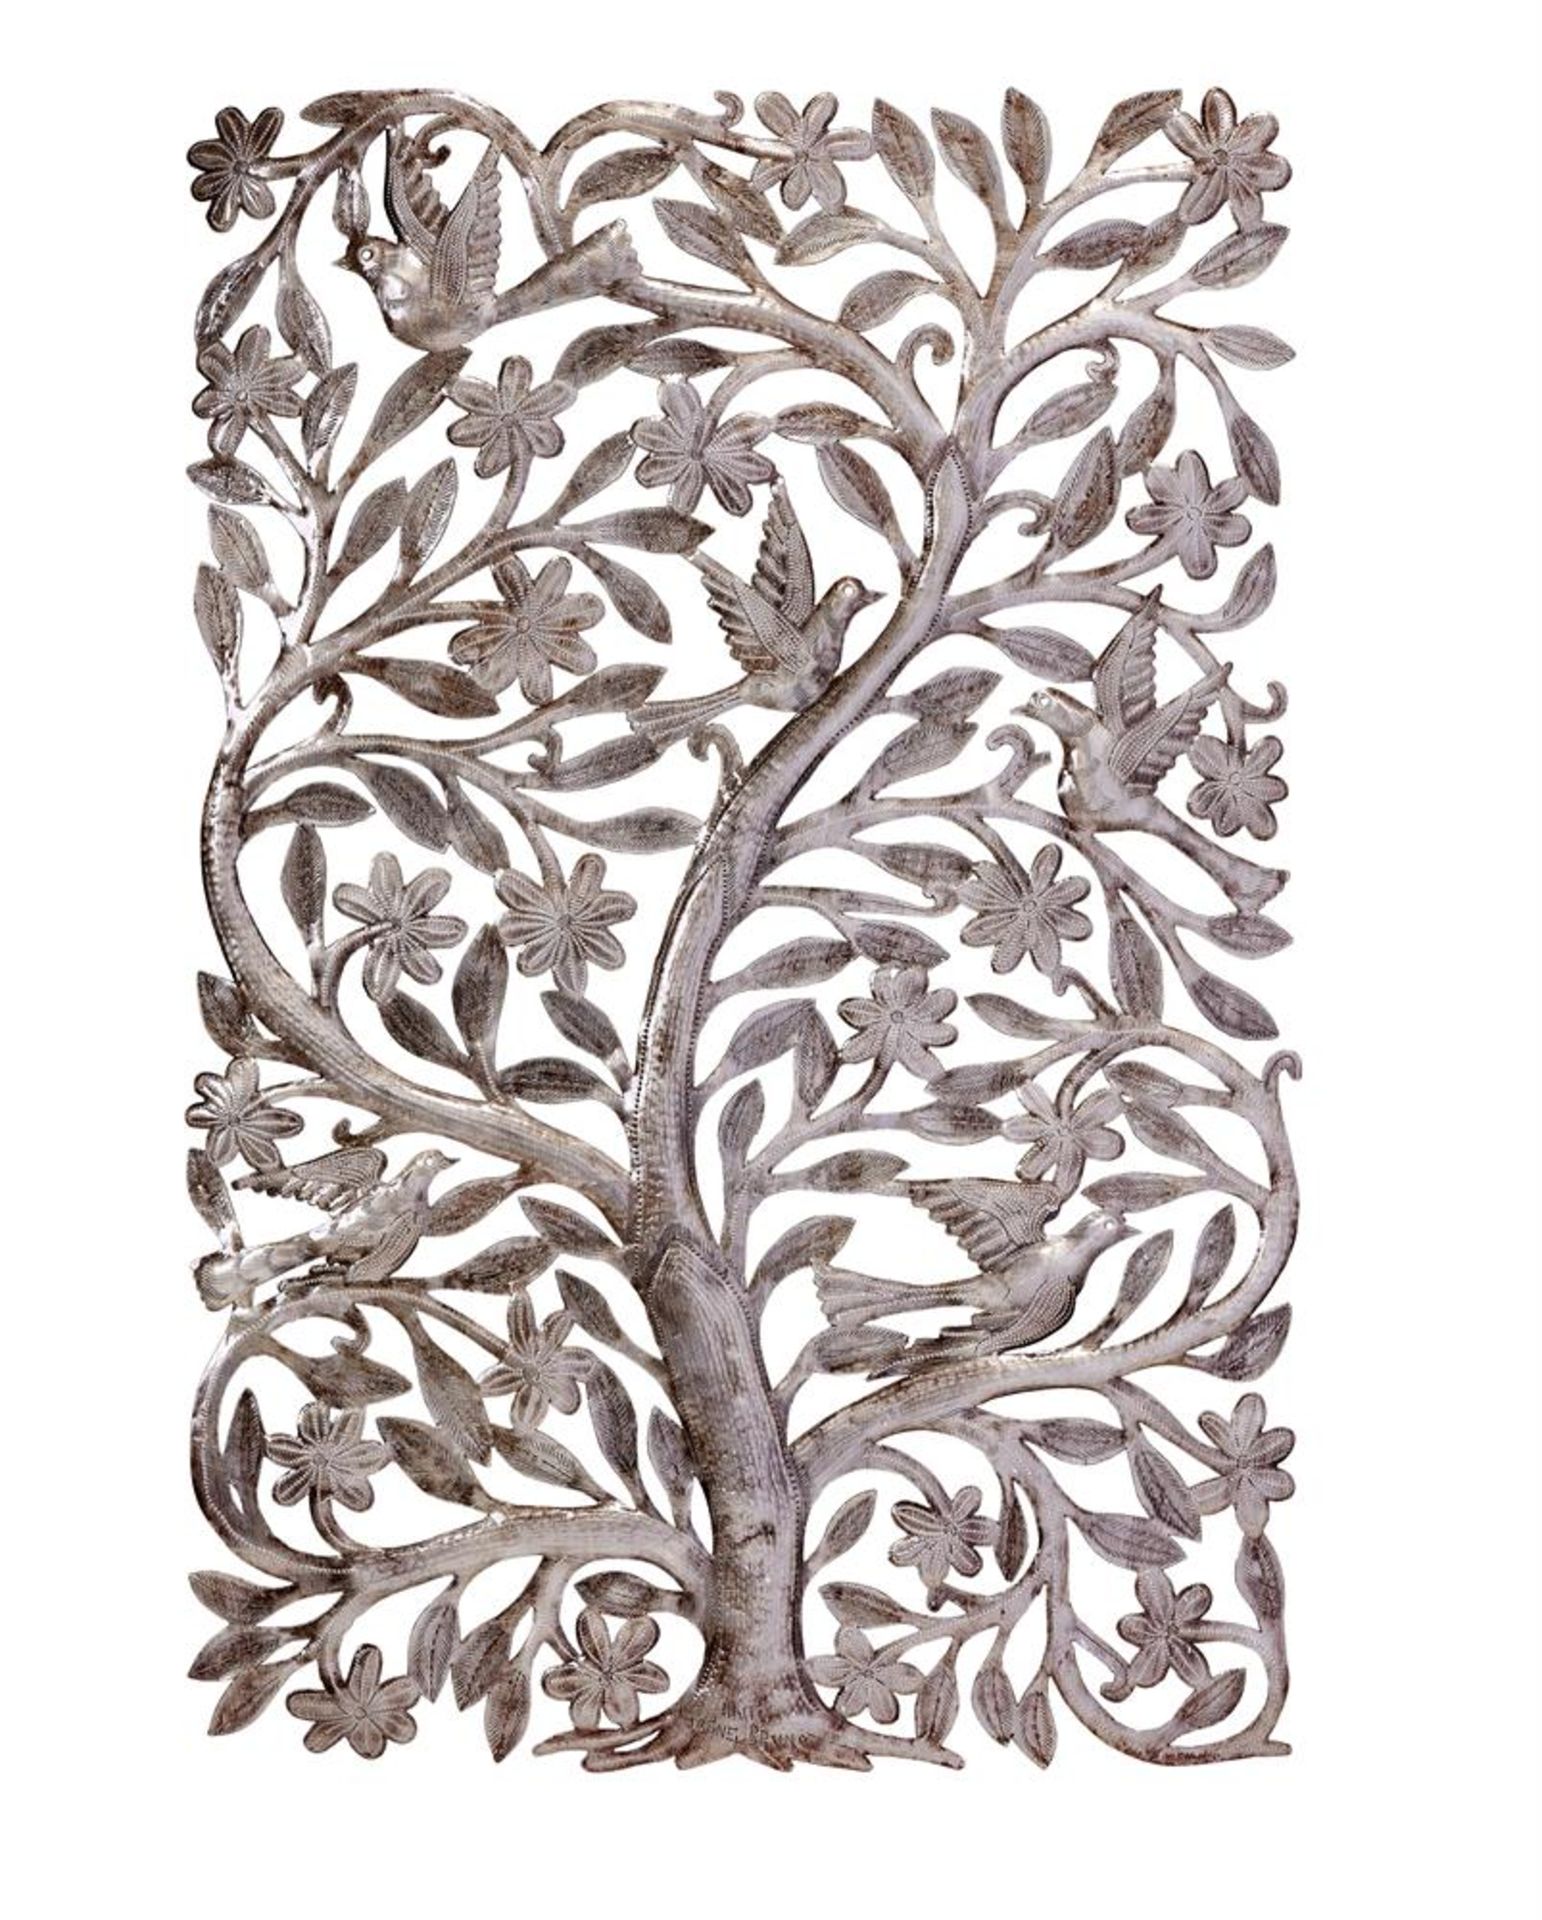 A CUT POLISHED STEEL PANEL 'THE TREE OF LIFE' HAITI, 20TH CENTURY